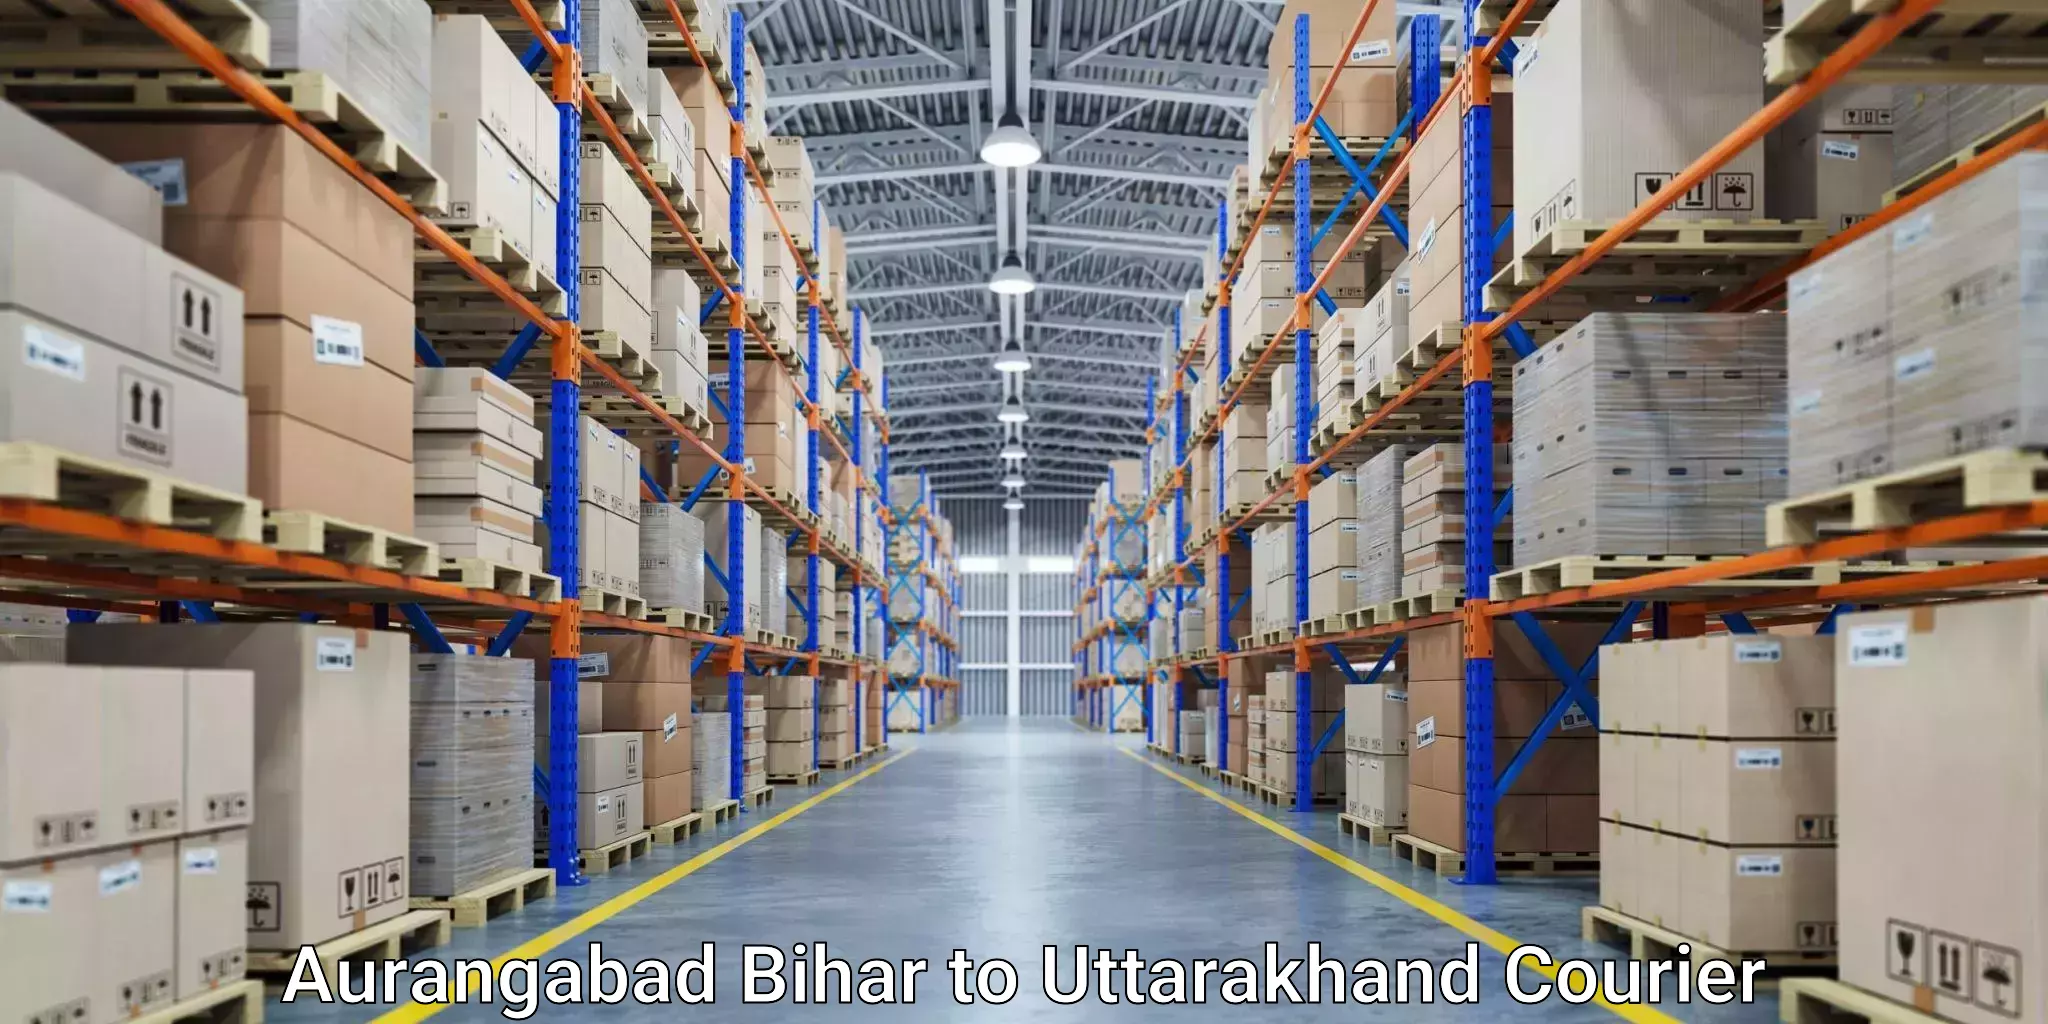 Courier tracking online Aurangabad Bihar to Bageshwar